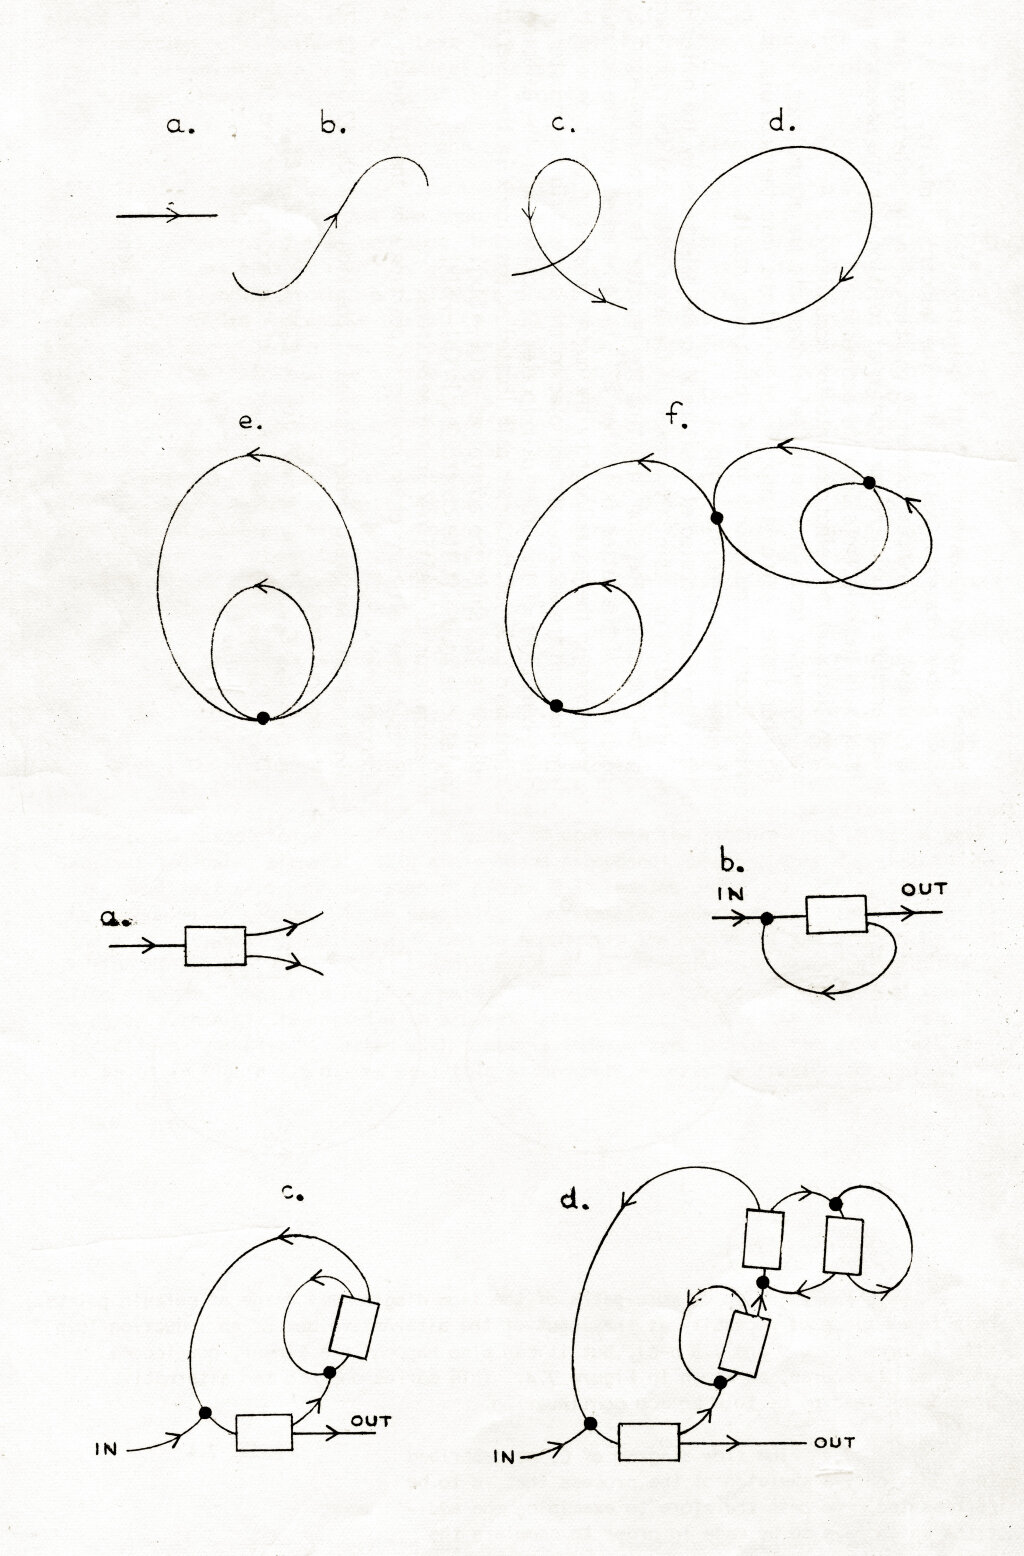 38 Herman H. Goldstine and John von Neumann, “Drawing Flow Diagrams,” 1947